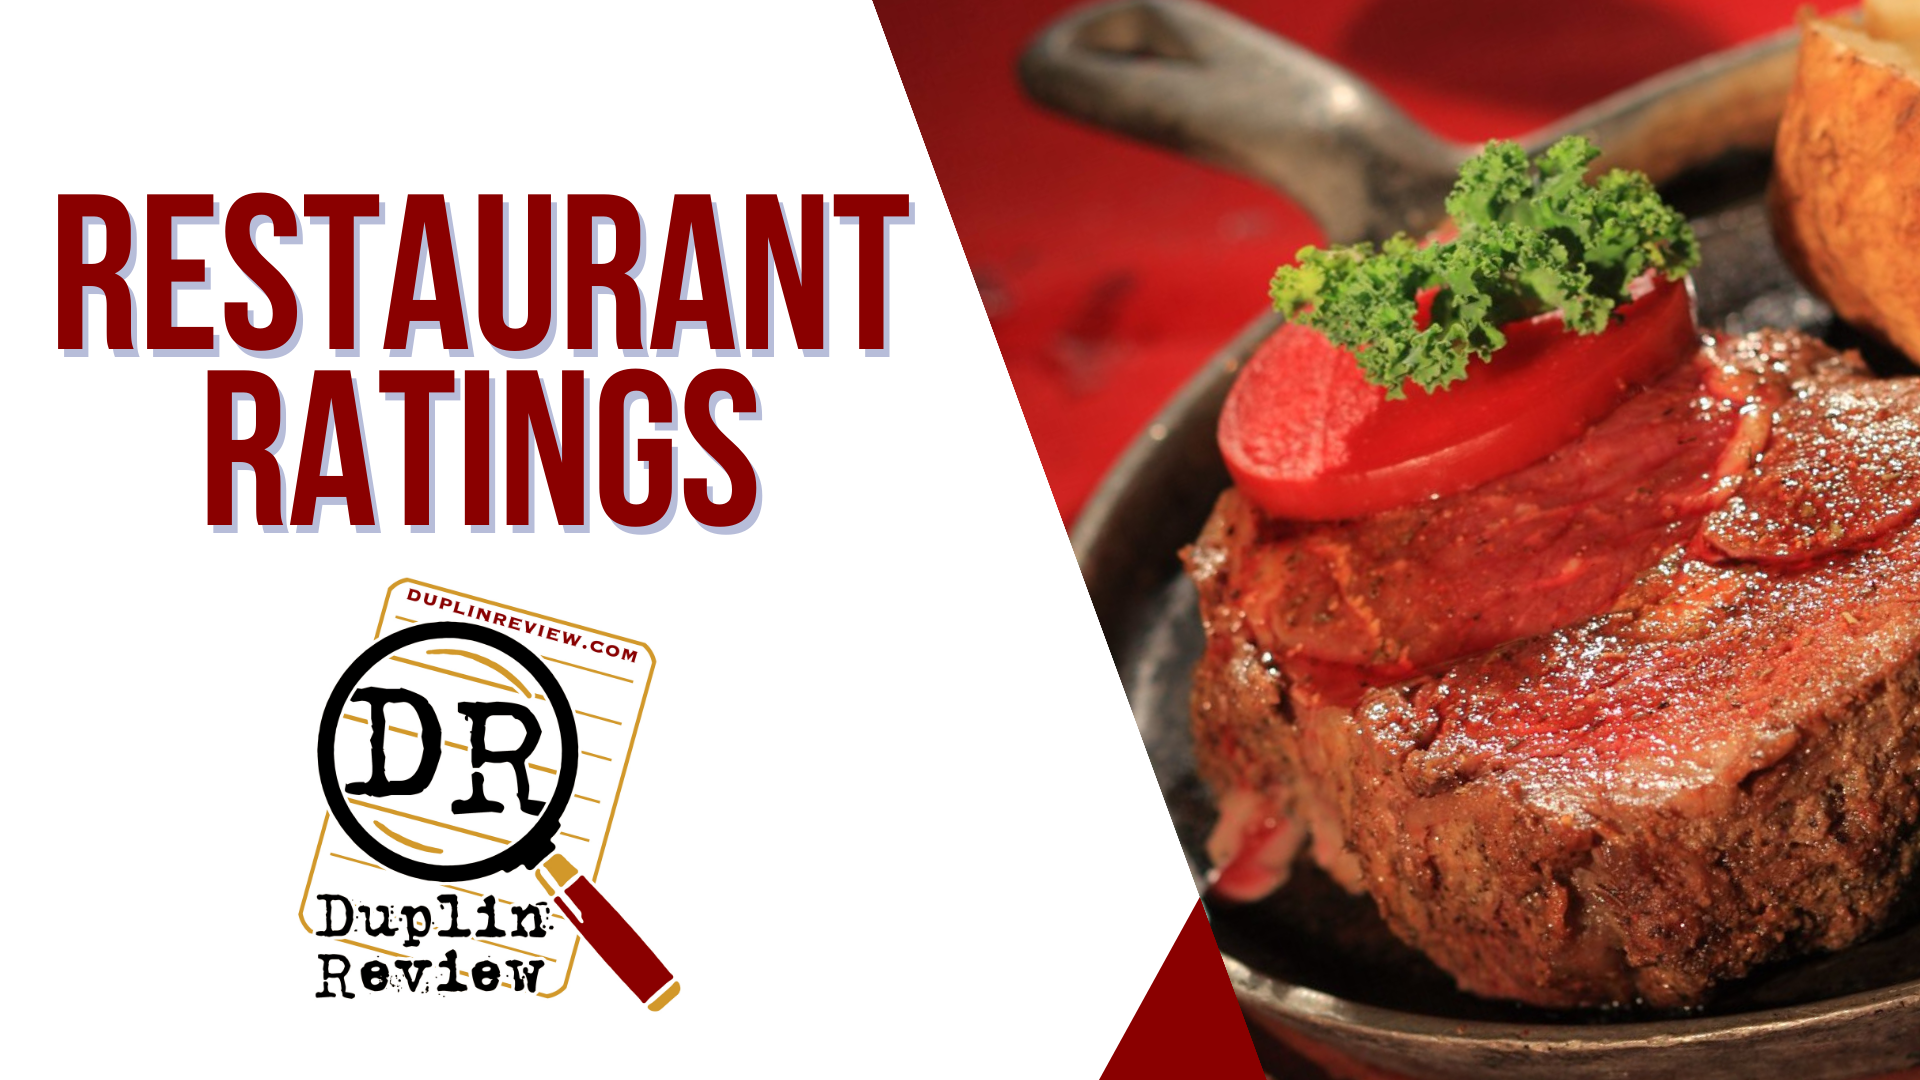 Duplin County Public Records: June Restaurant Ratings — DuplinReview.com